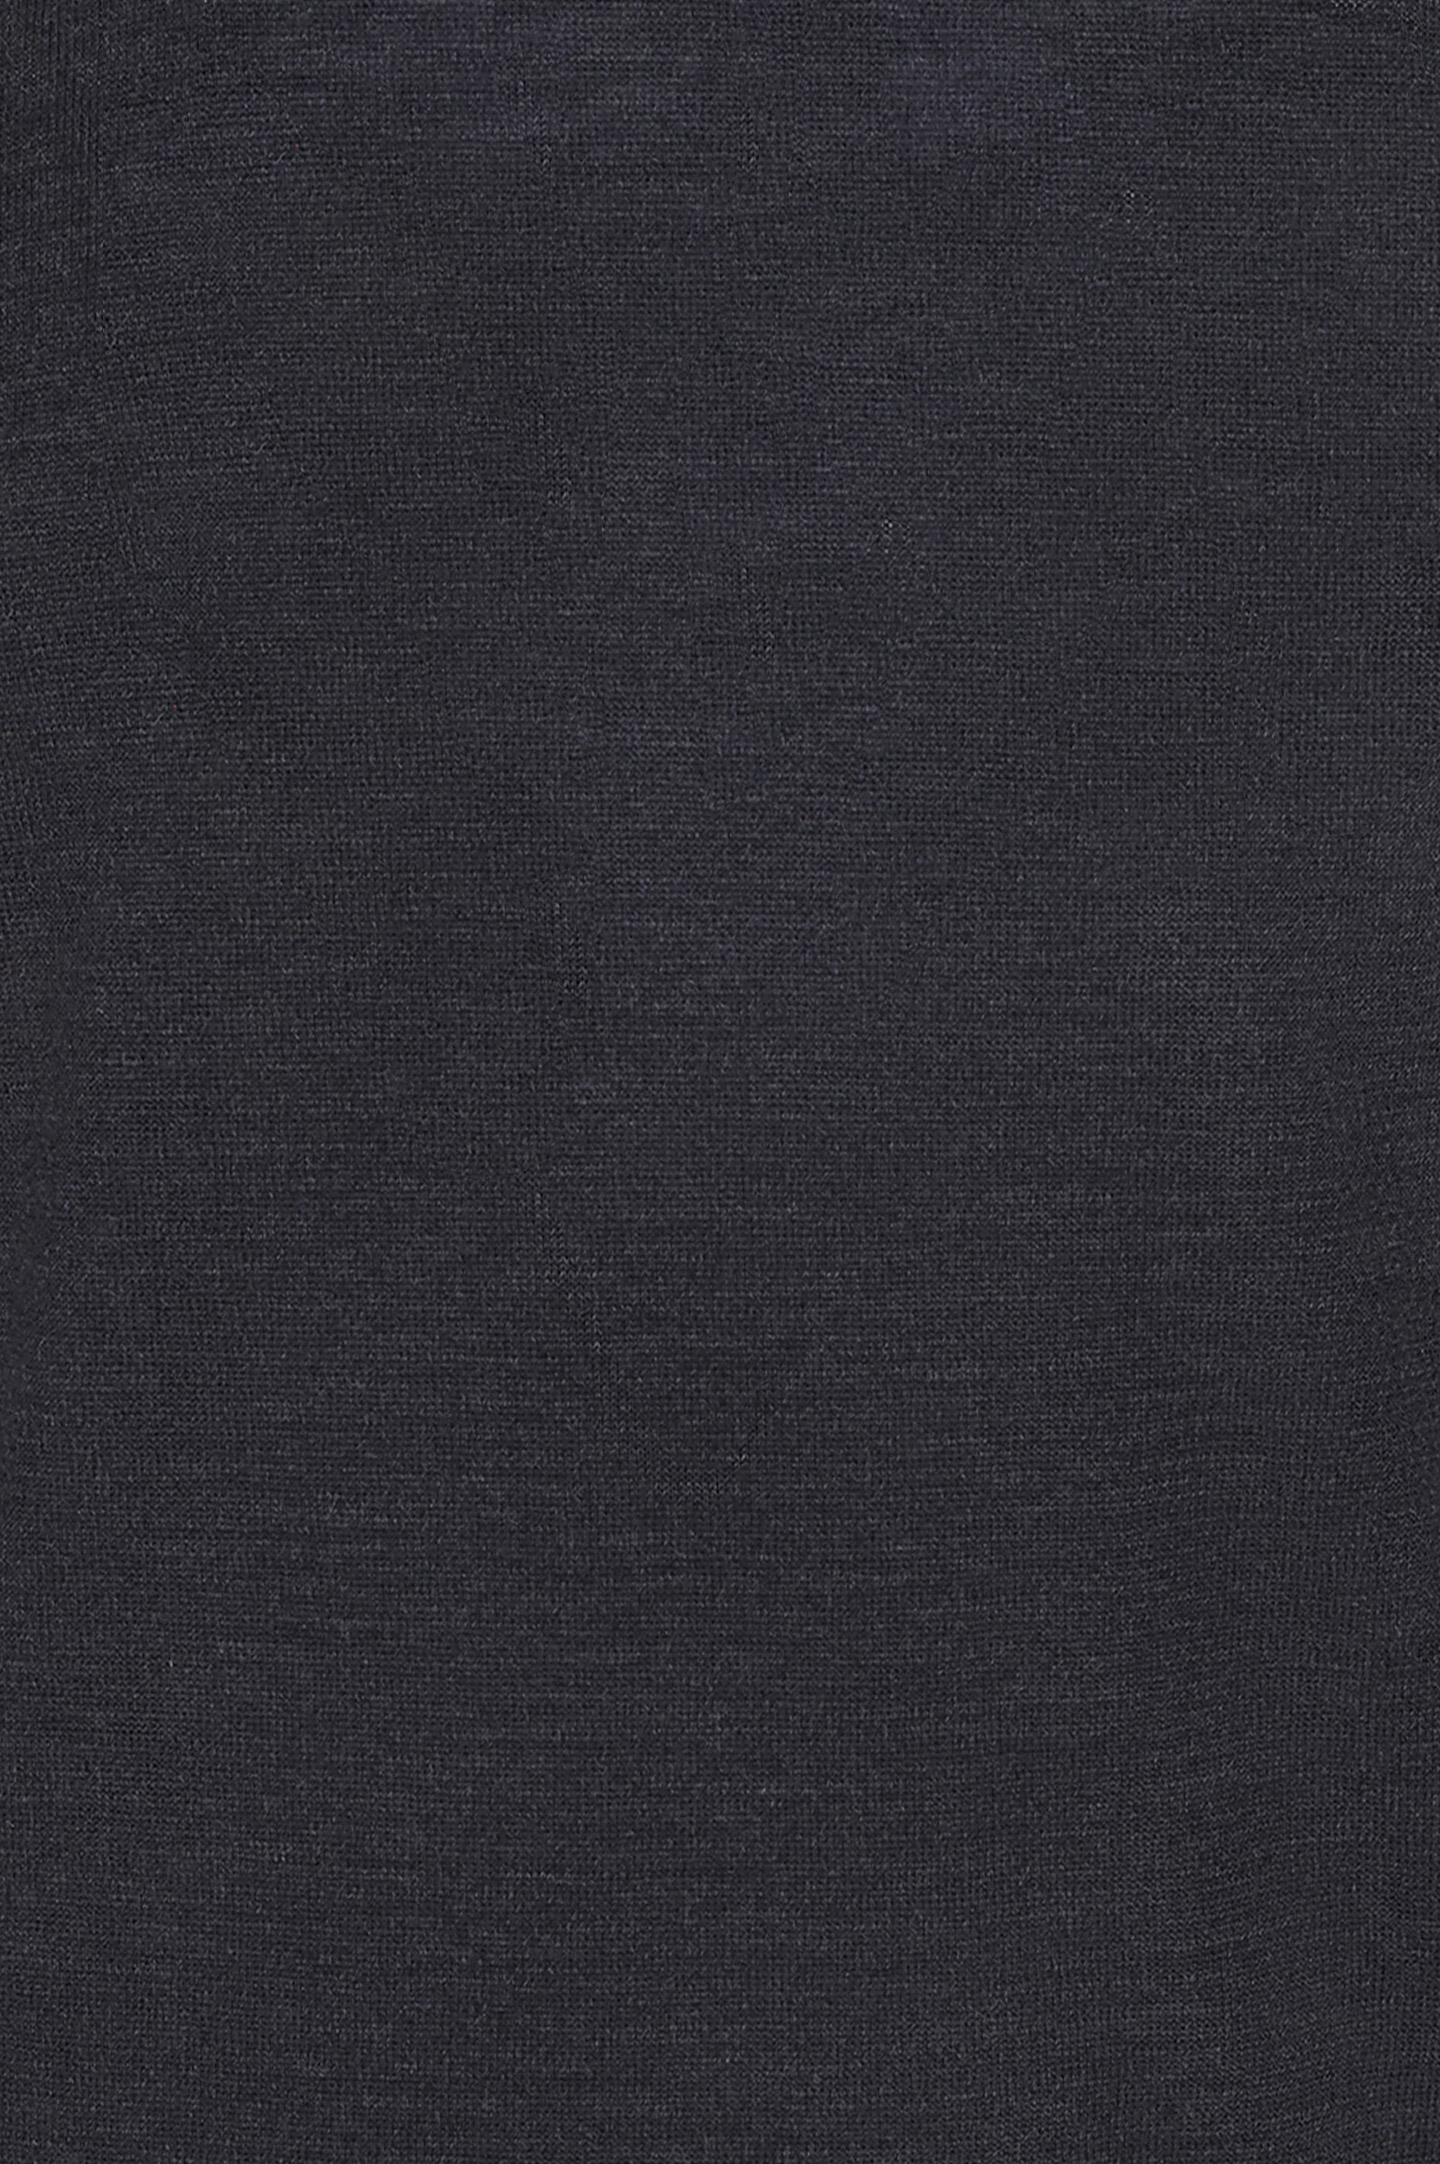 Свитер CANALI MK00077 C0012, цвет: Темно-серый, Мужской